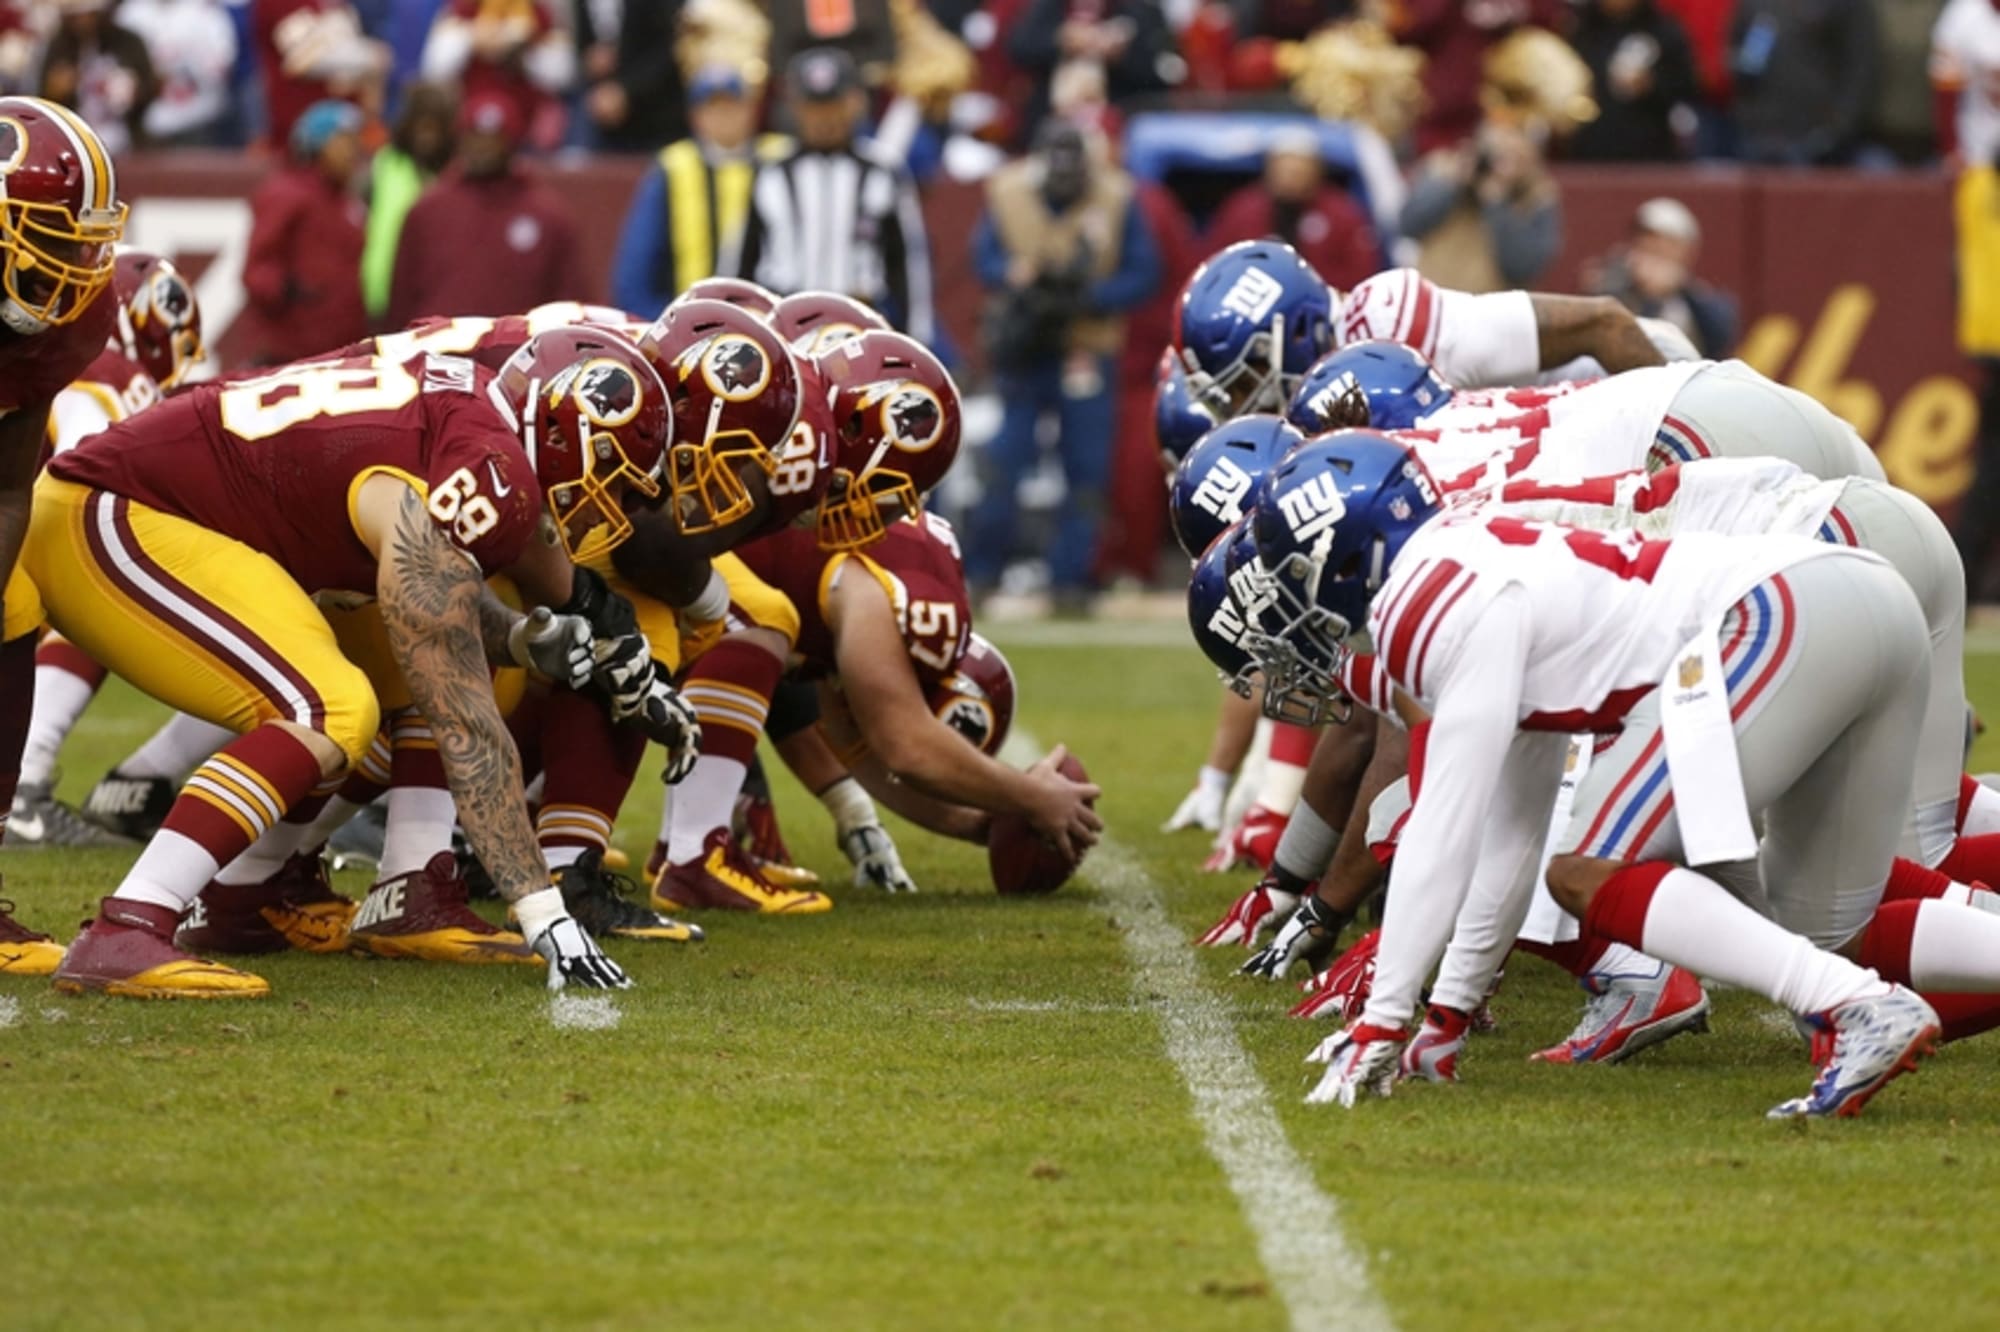 New York Giants vs. Washington Redskins: 5 Players To Watch